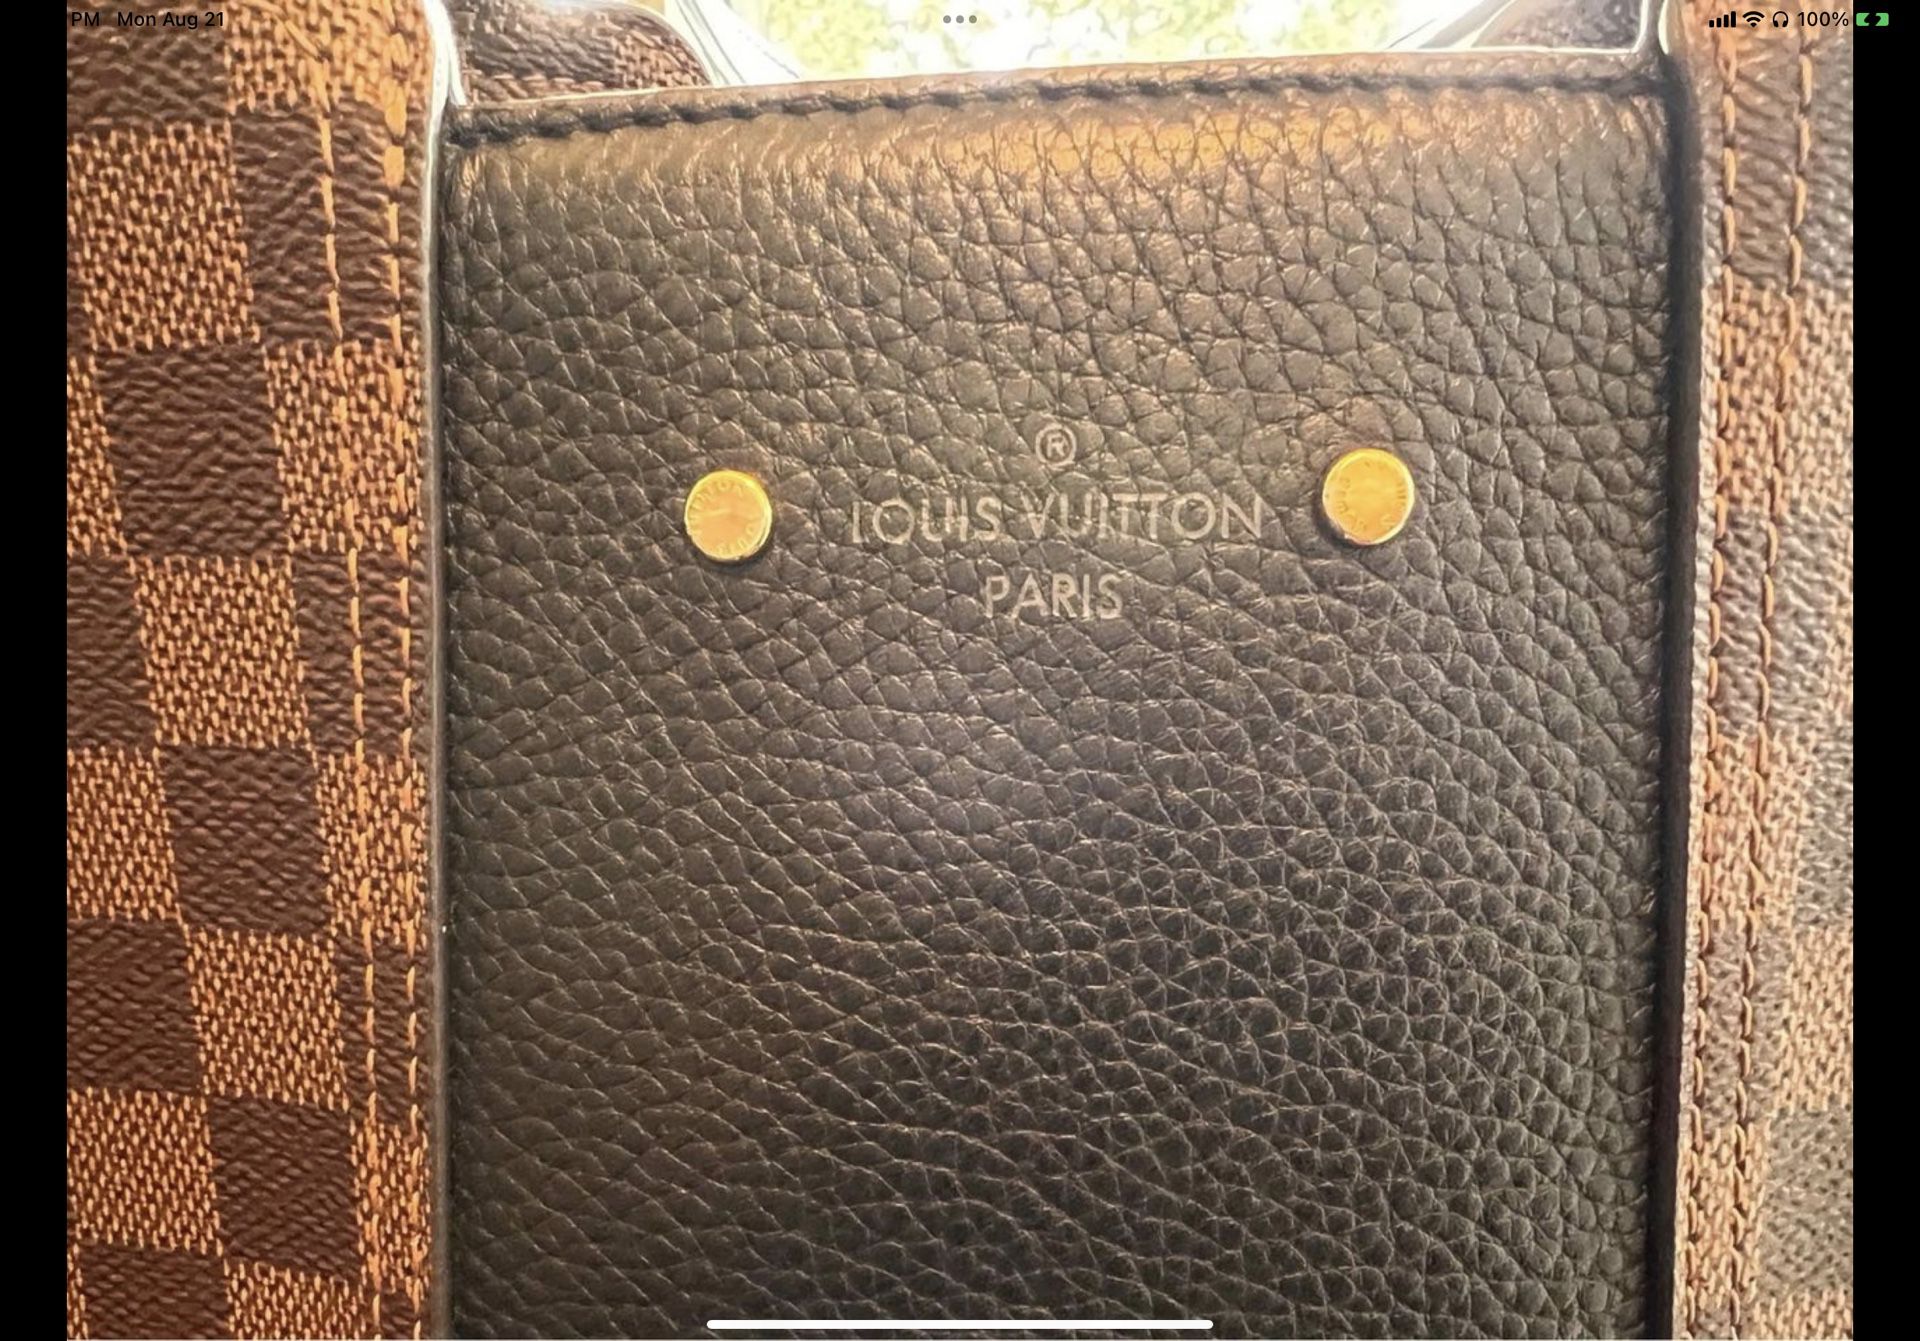 Louis Vuitton Damien Ebene Jersey Tote for Sale in San Antonio, TX - OfferUp